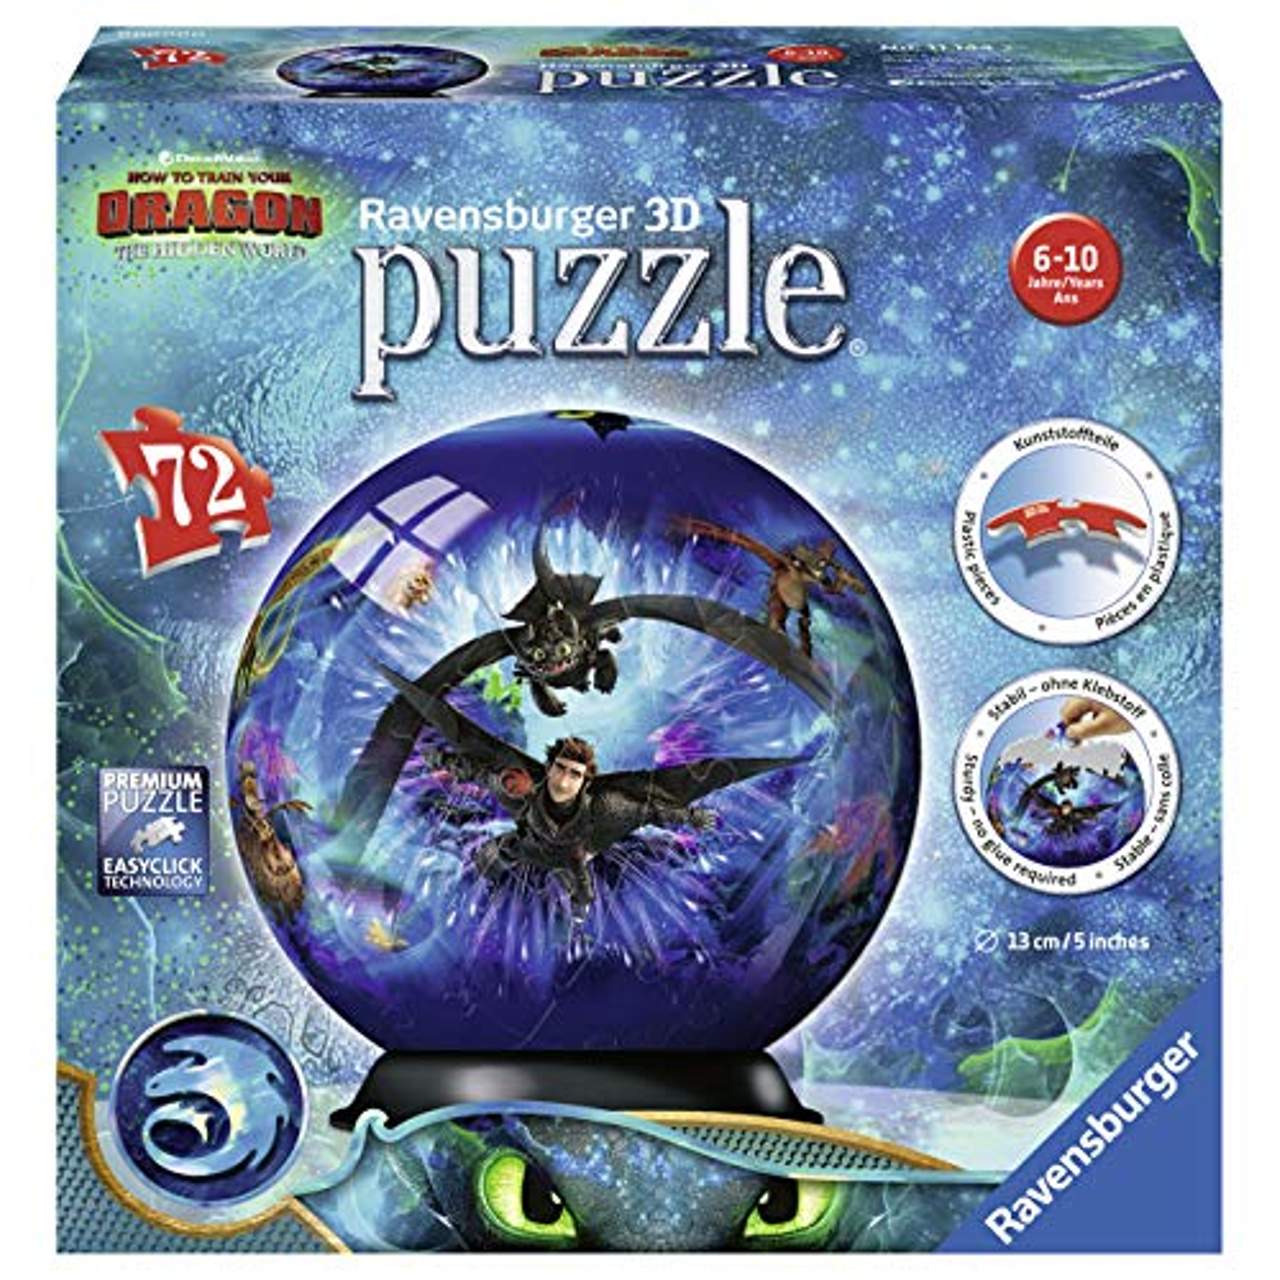 Ravensburger 3D Puzzle 11144 Dragons 3